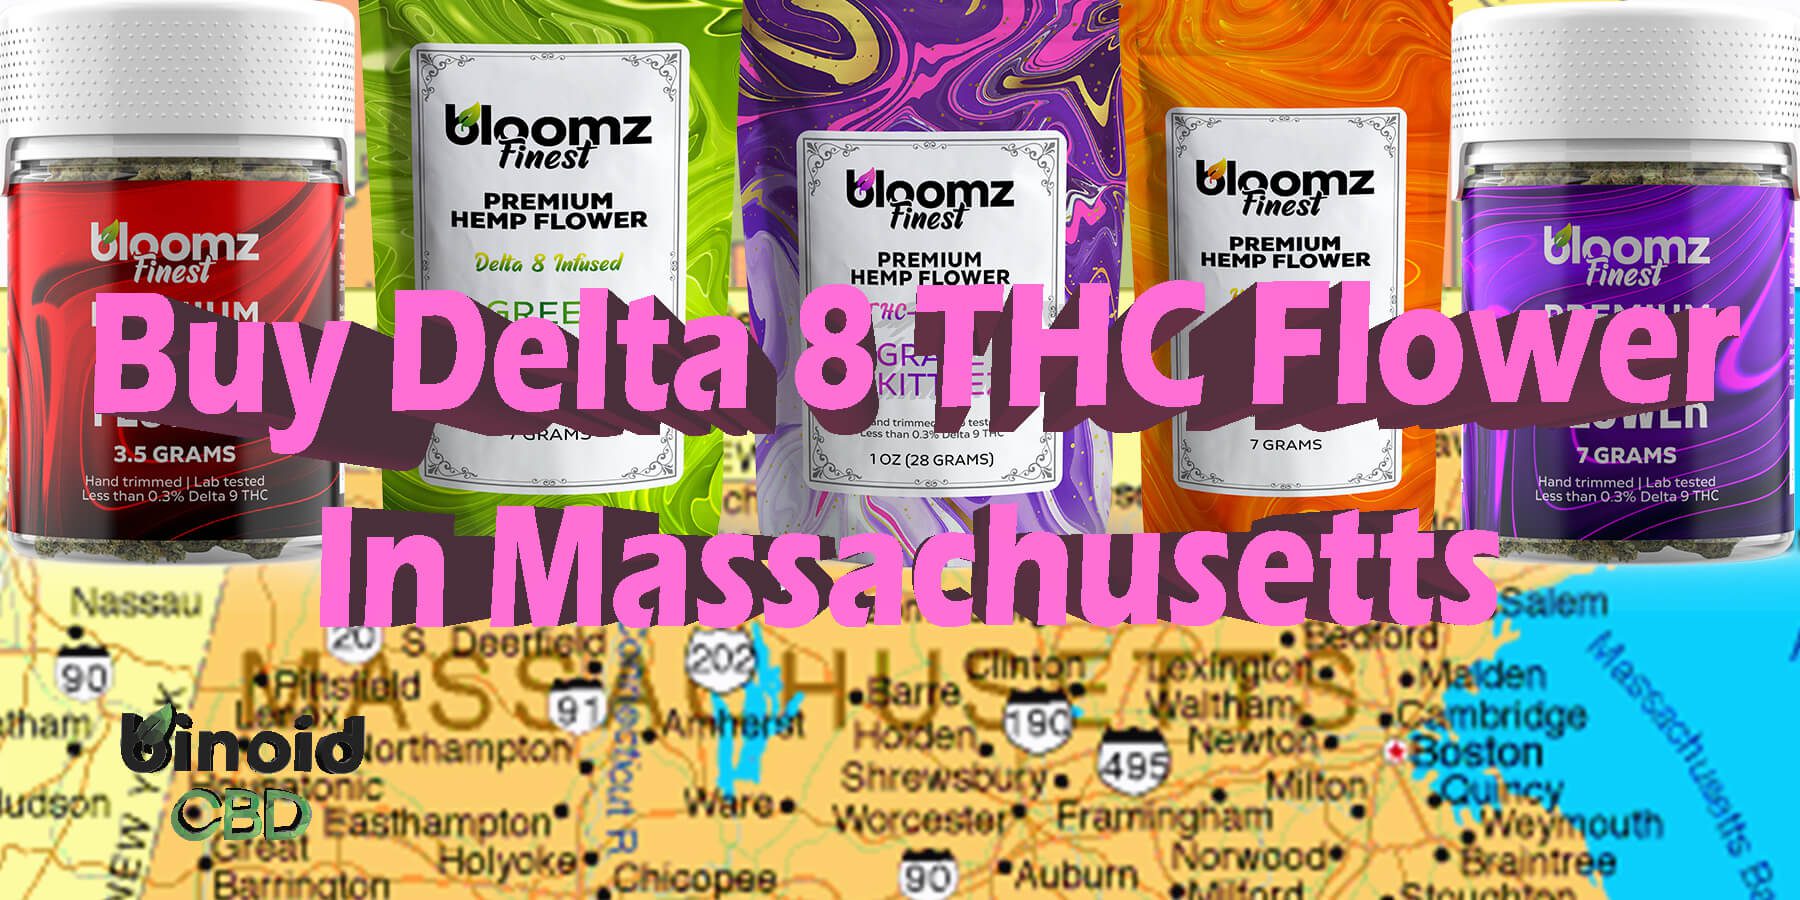 Buy Delta 8 THC Hemp Flower Massachusetts Get Near Me Best Price Place To Get Legal Reddit Strongest